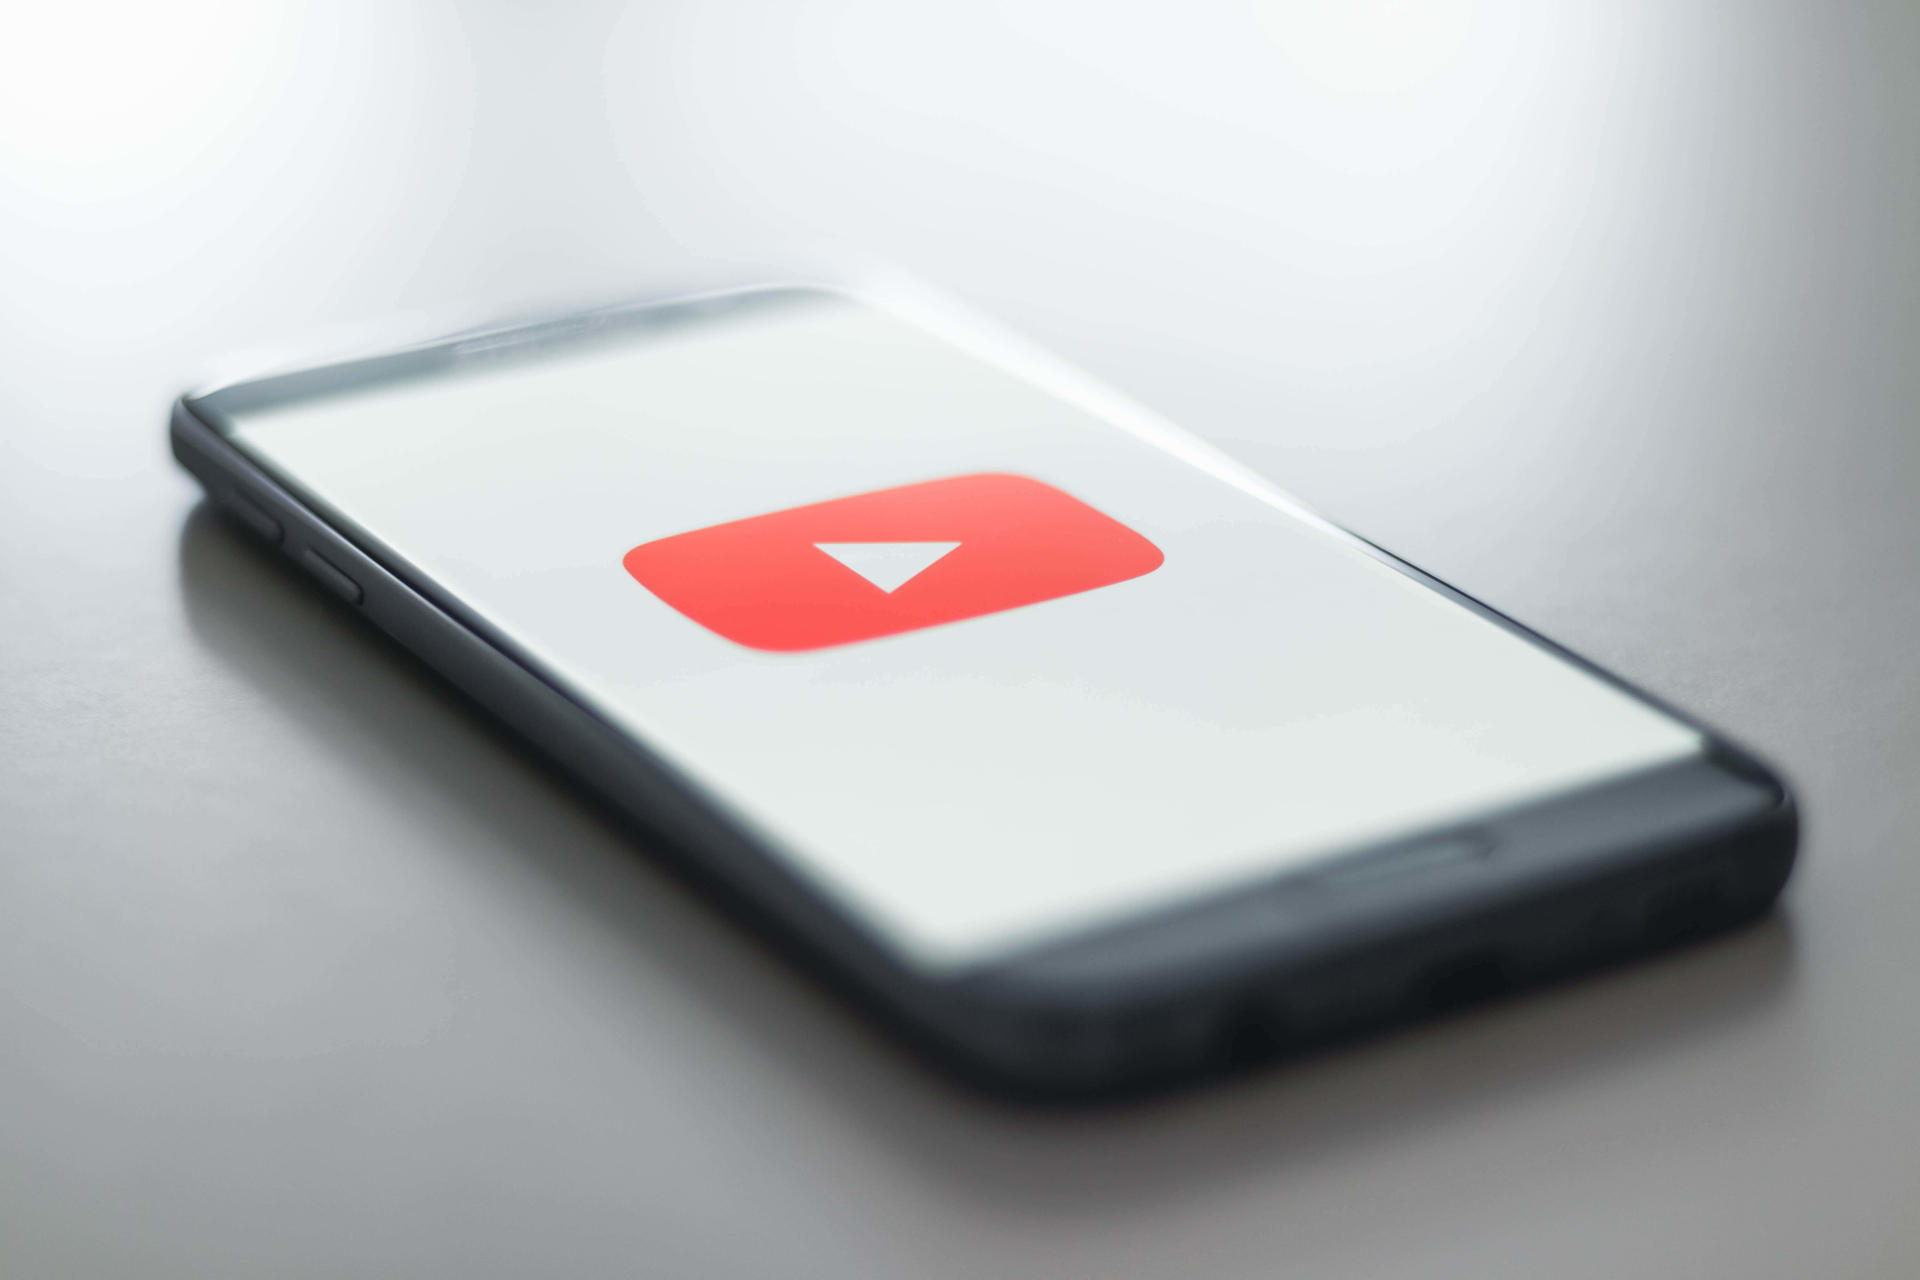 youtube logo on a phone